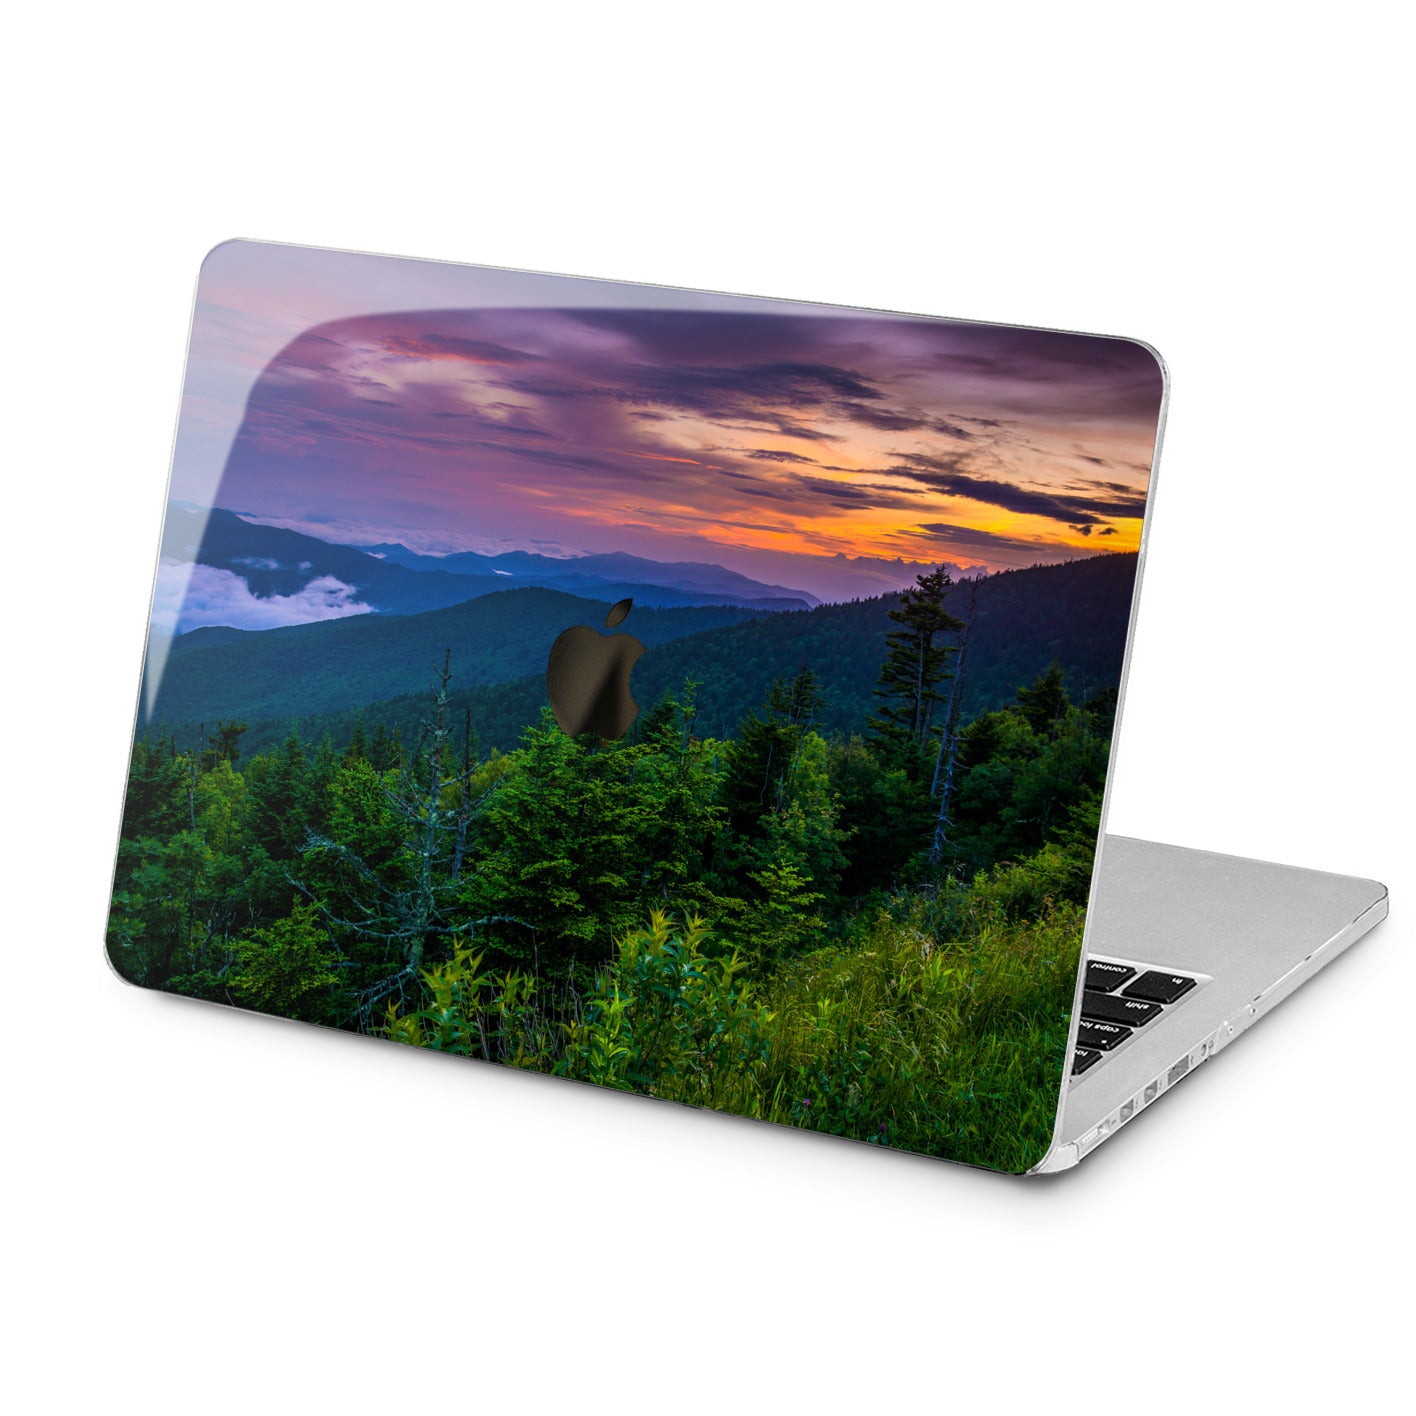 Lex Altern Lex Altern Sunset Sky Case for your Laptop Apple Macbook.